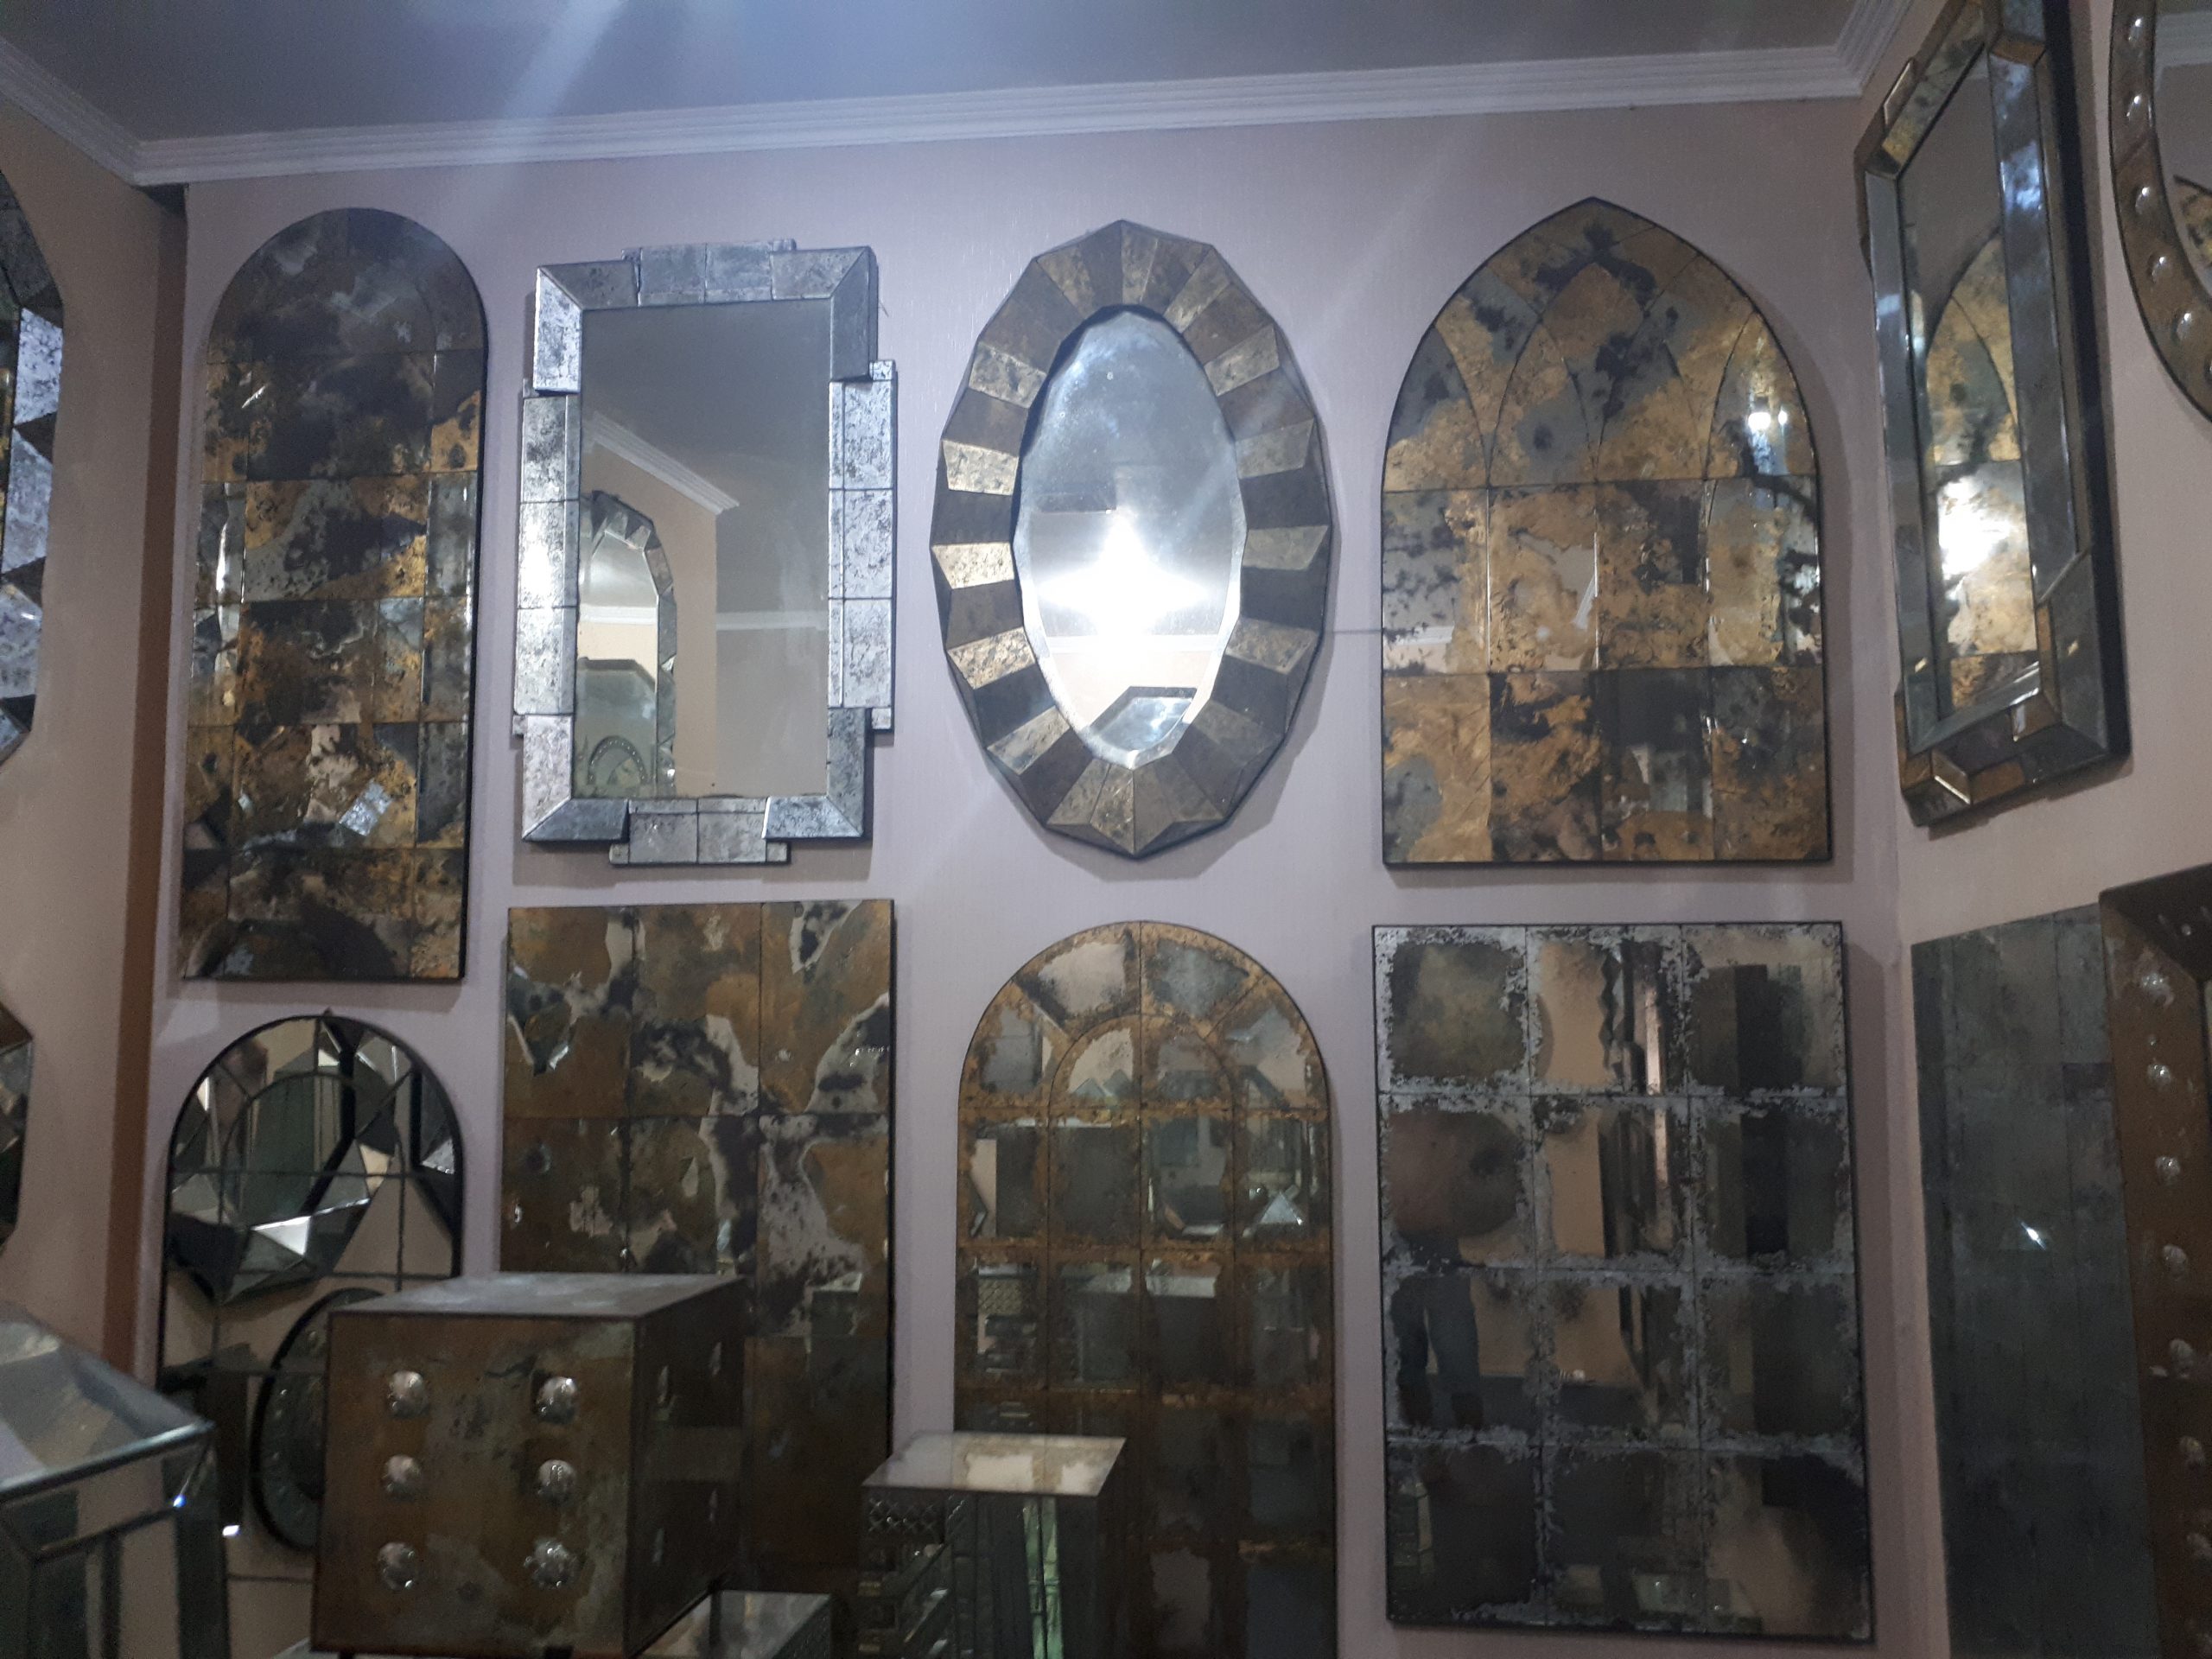 Antique glass mirror for interior decoration.